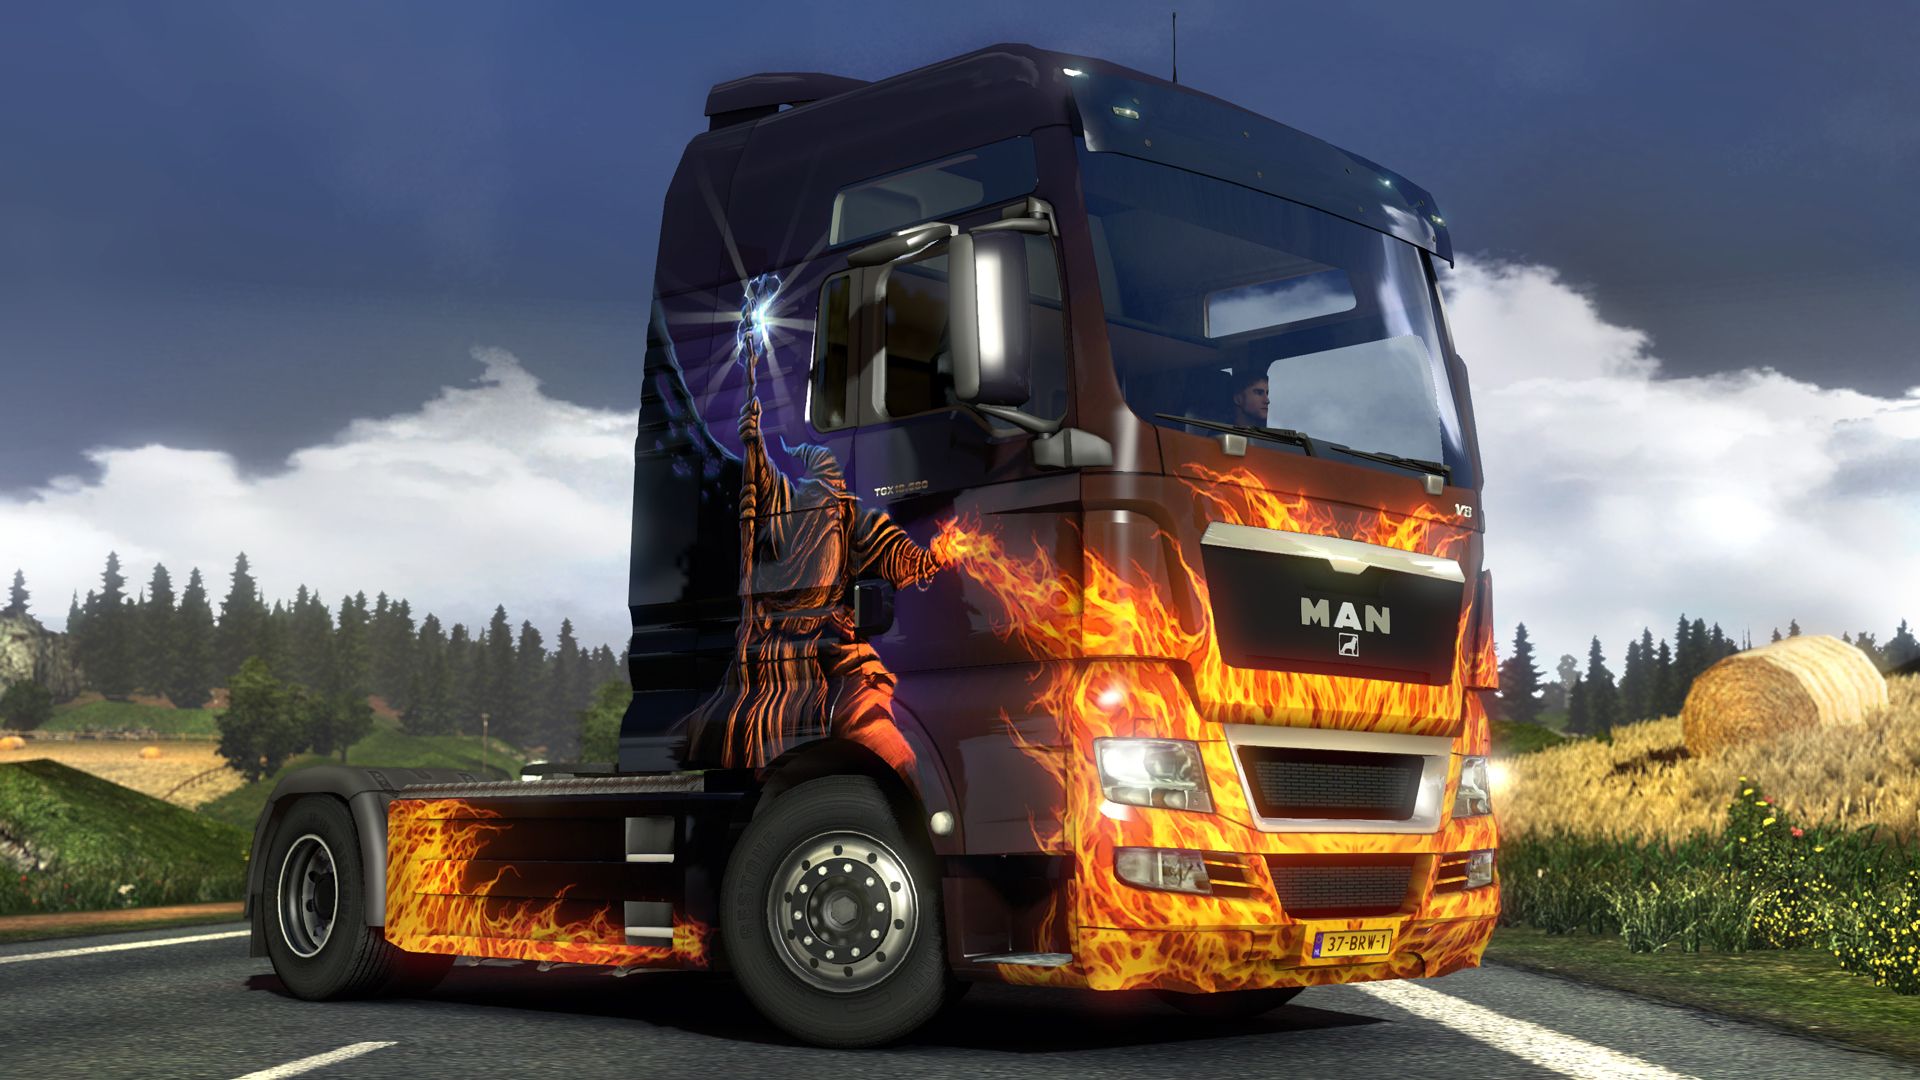 Euro Truck Simulator 2 - Fantasy Paint Jobs Pack